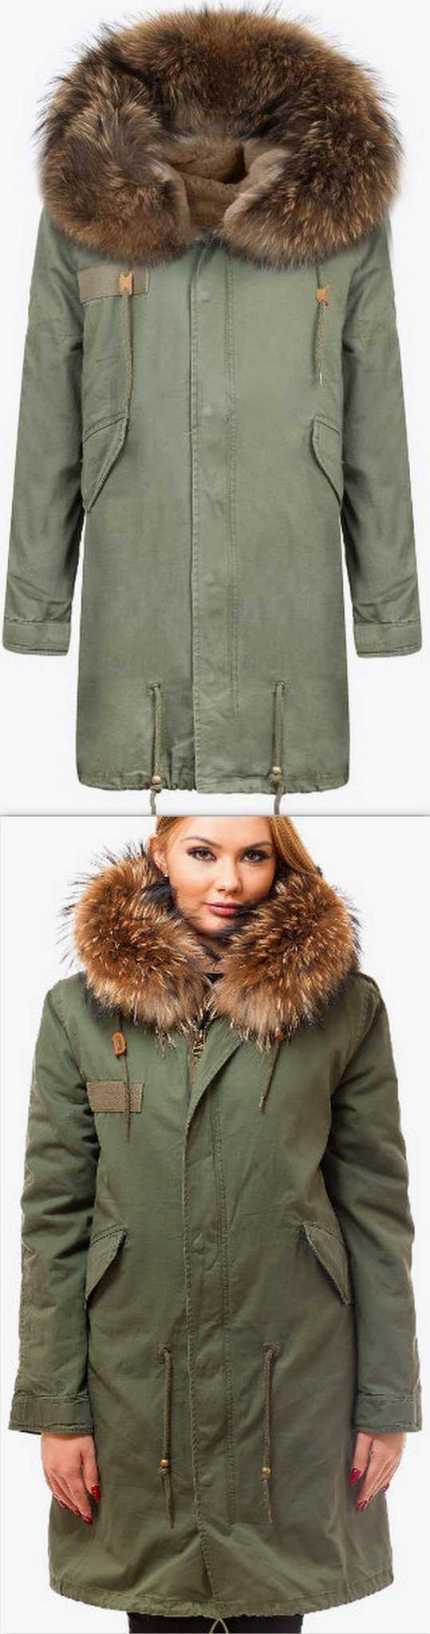 Army-Green Fur Parka Coat-Natural | DESIGNER INSPIRED FASHIONS